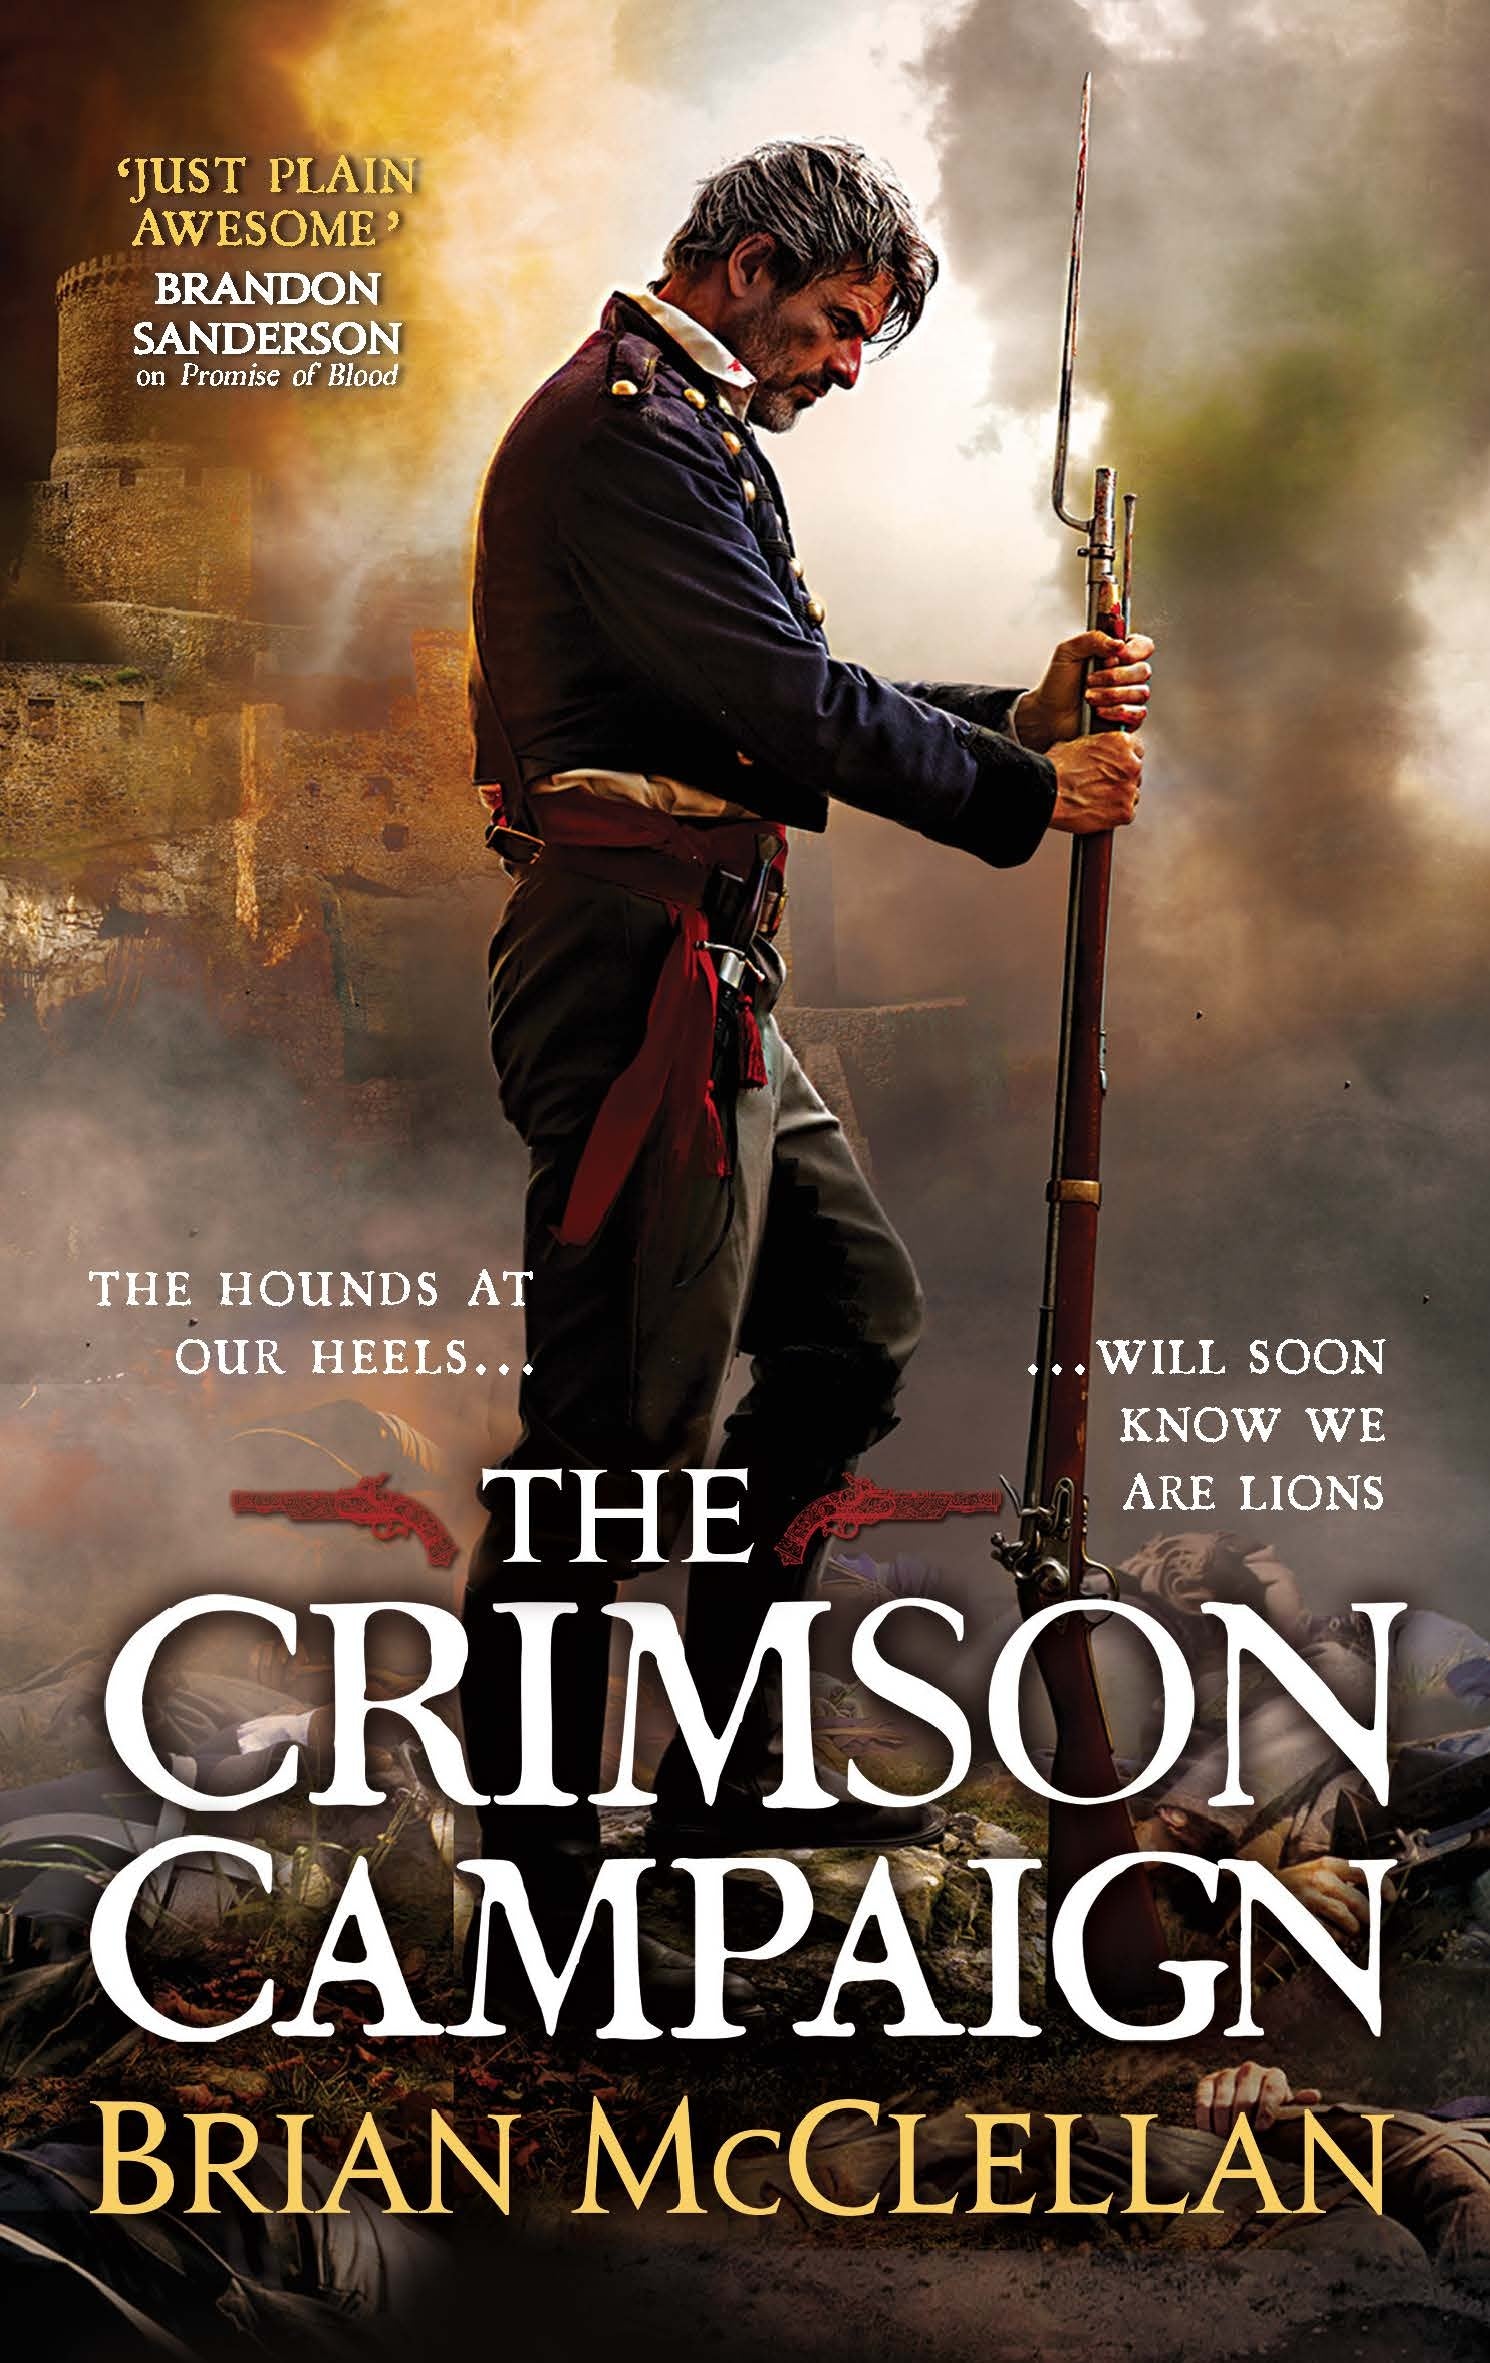 The Crimson Campaign by Brian McClellan